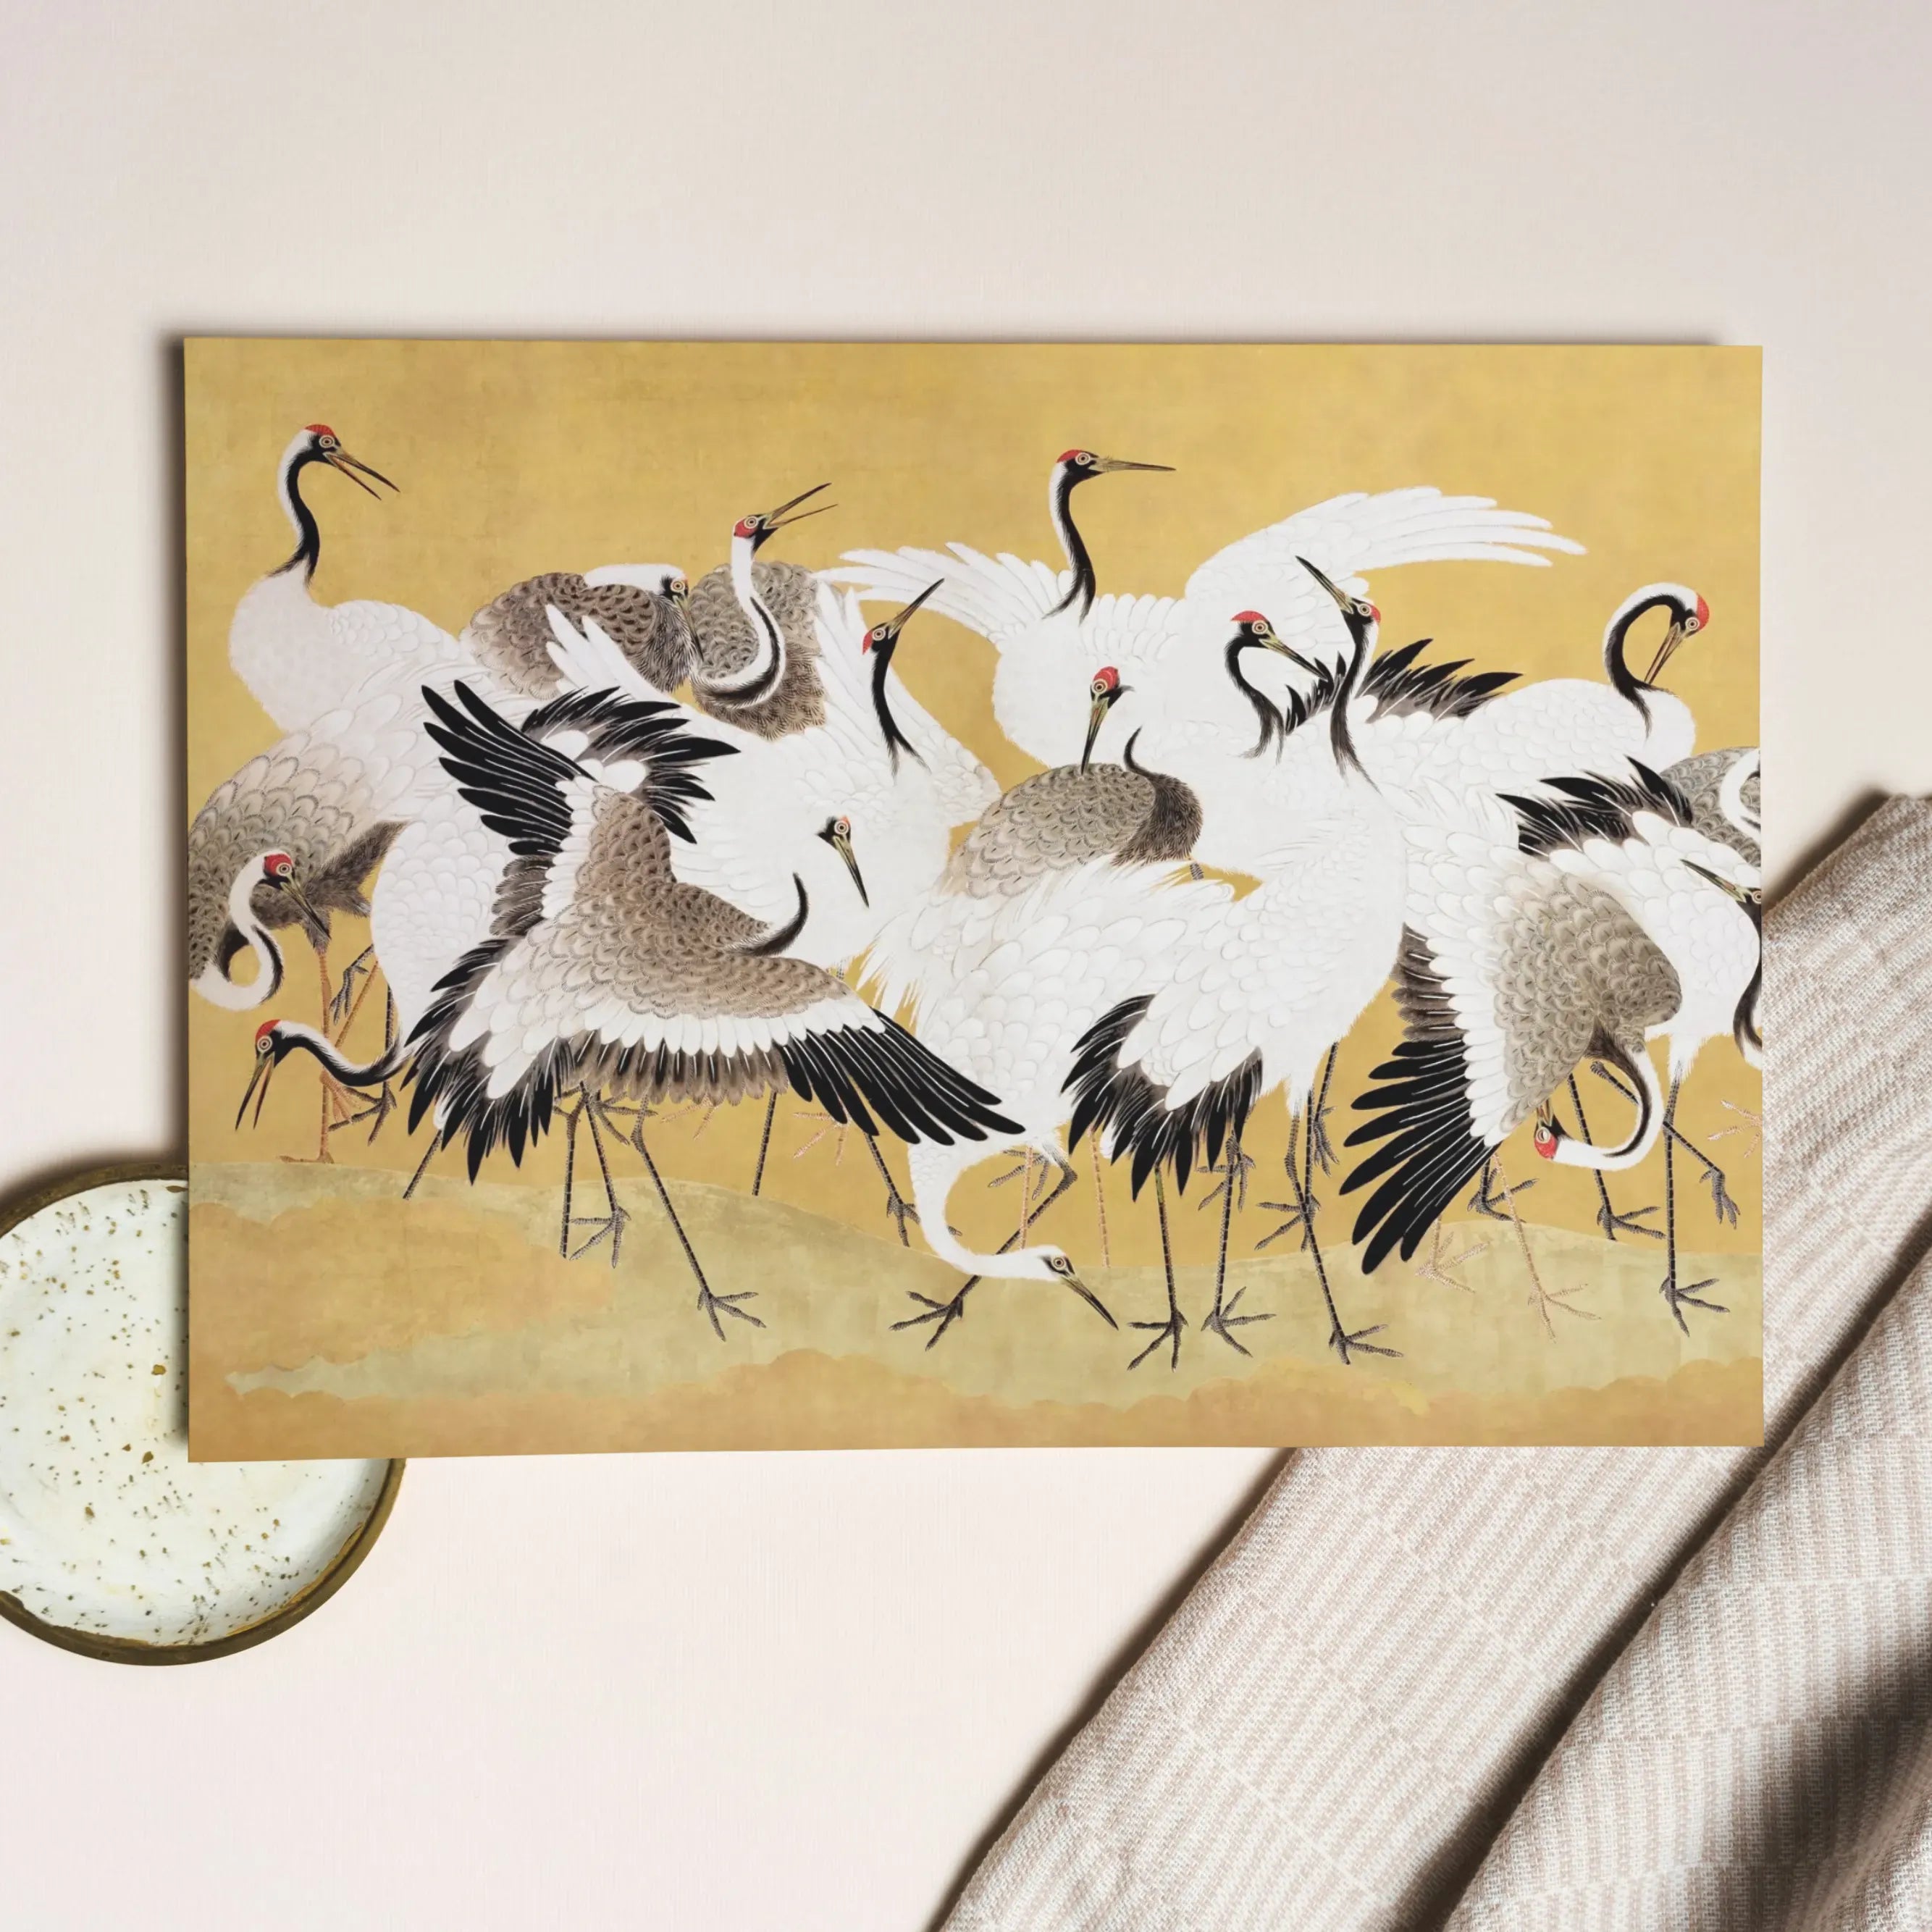 Flock Of Cranes By Ishida Yūtei Greeting Card - Greeting & Note Cards - Aesthetic Art